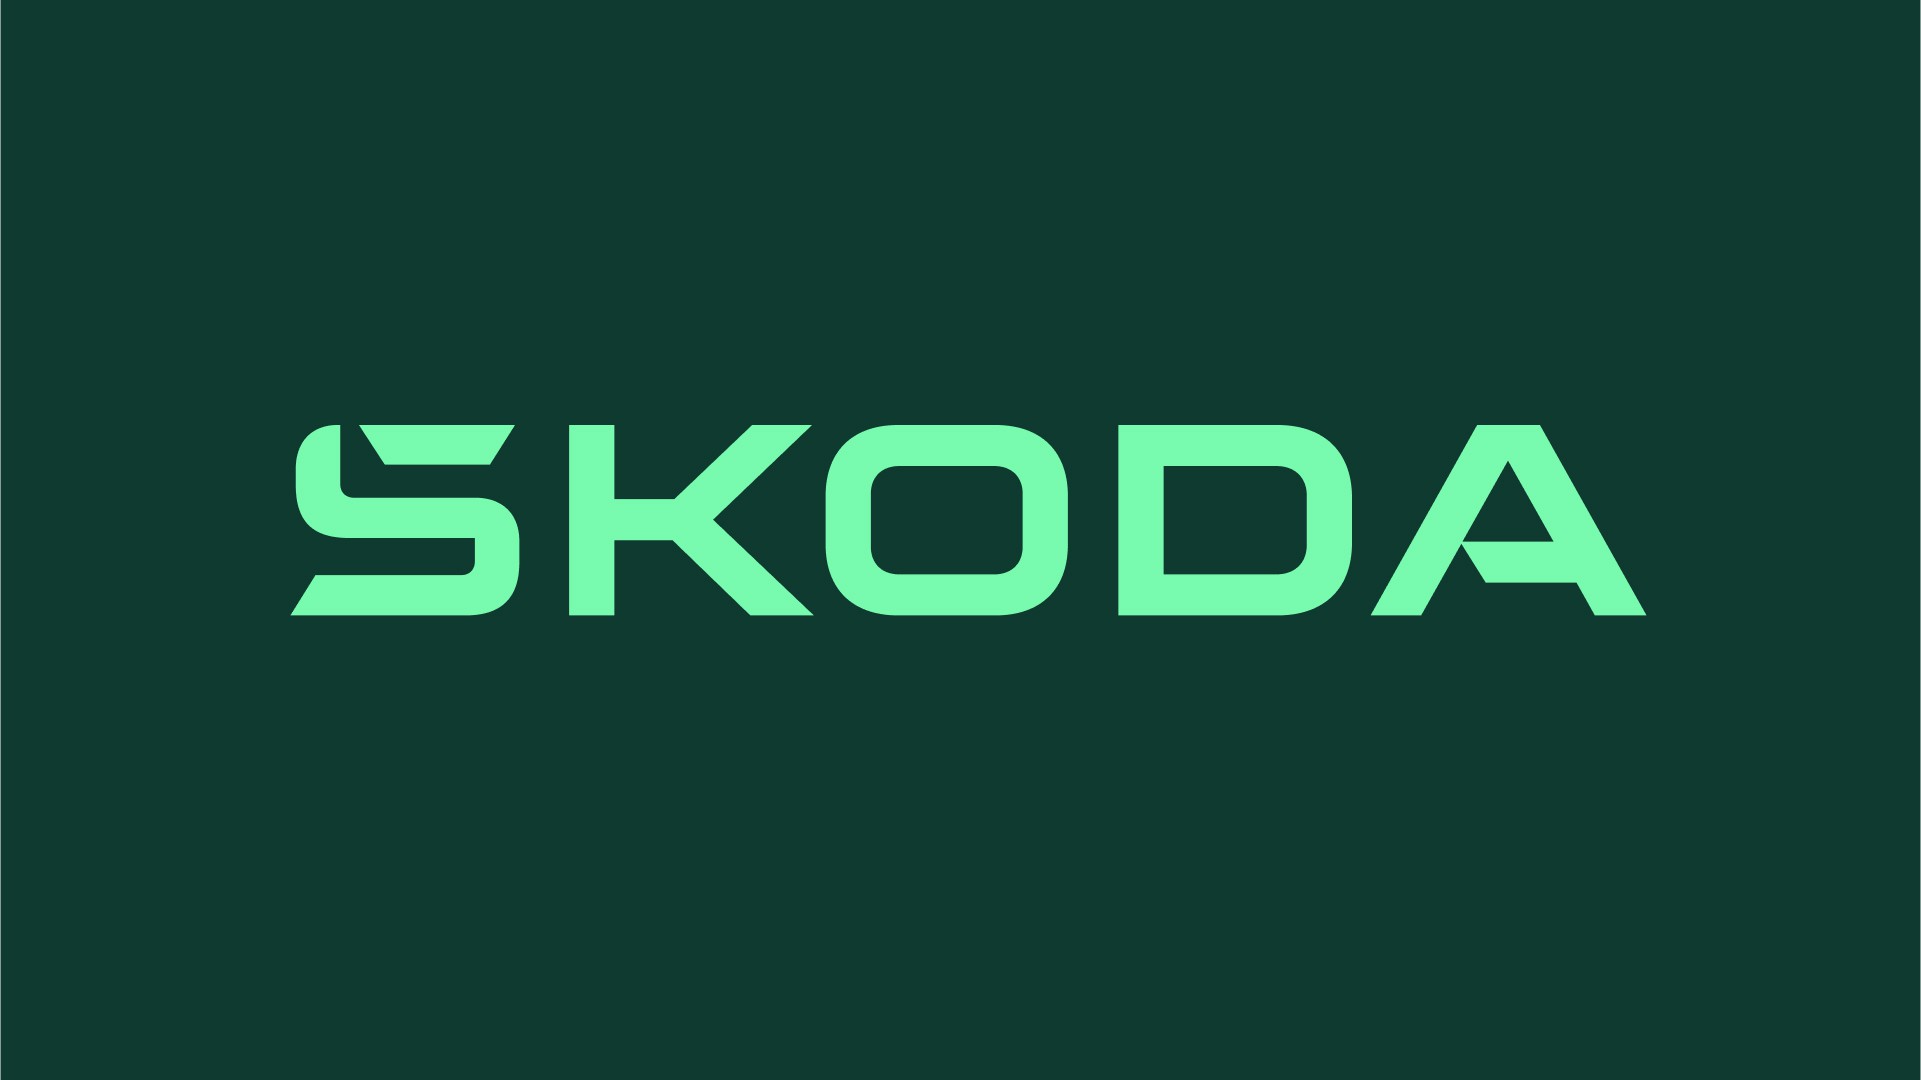 Corporate Design Corporate Identity - Škoda